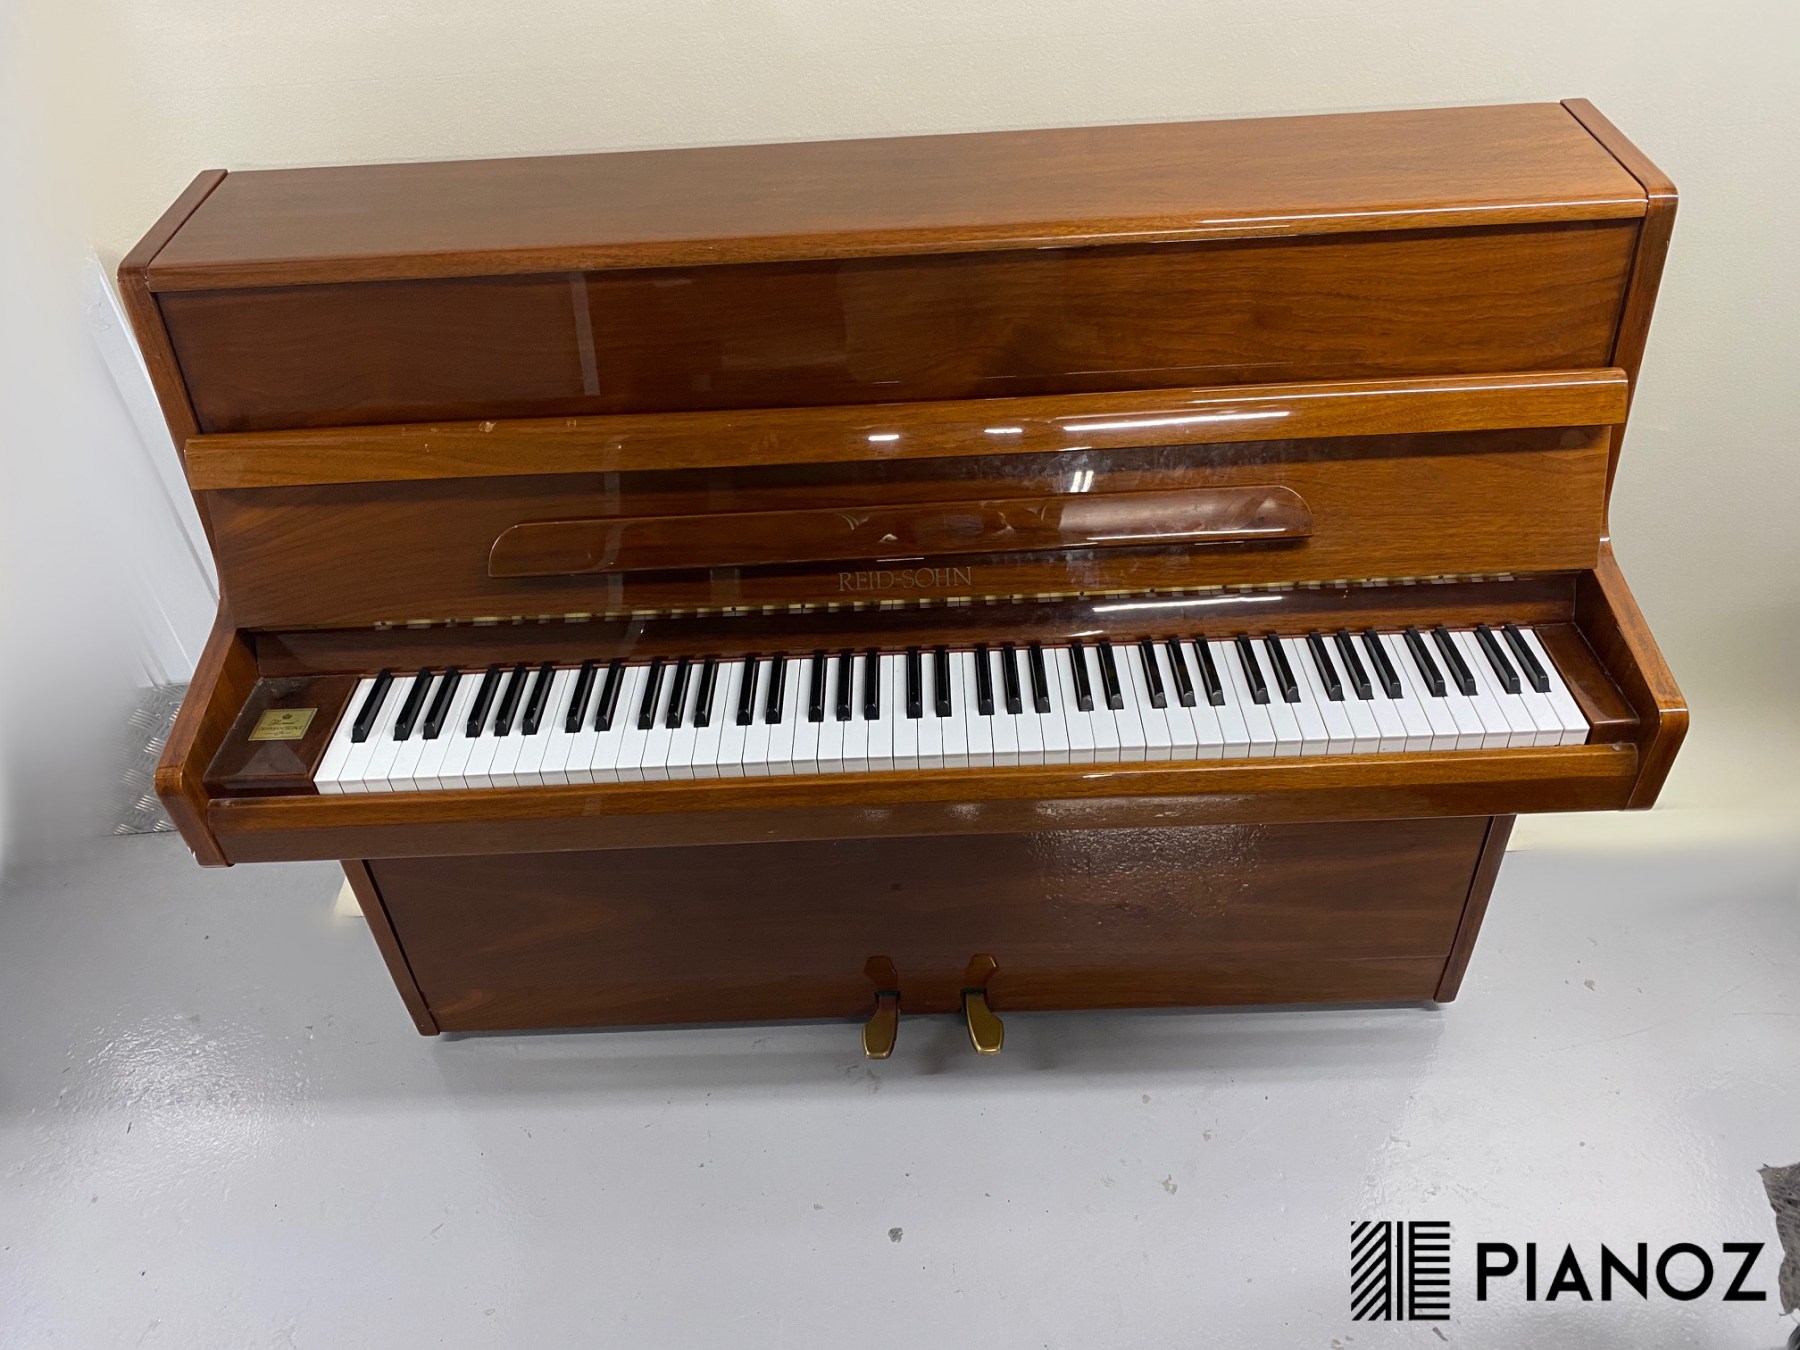 Reid Sohn Modern Upright Piano piano for sale in UK